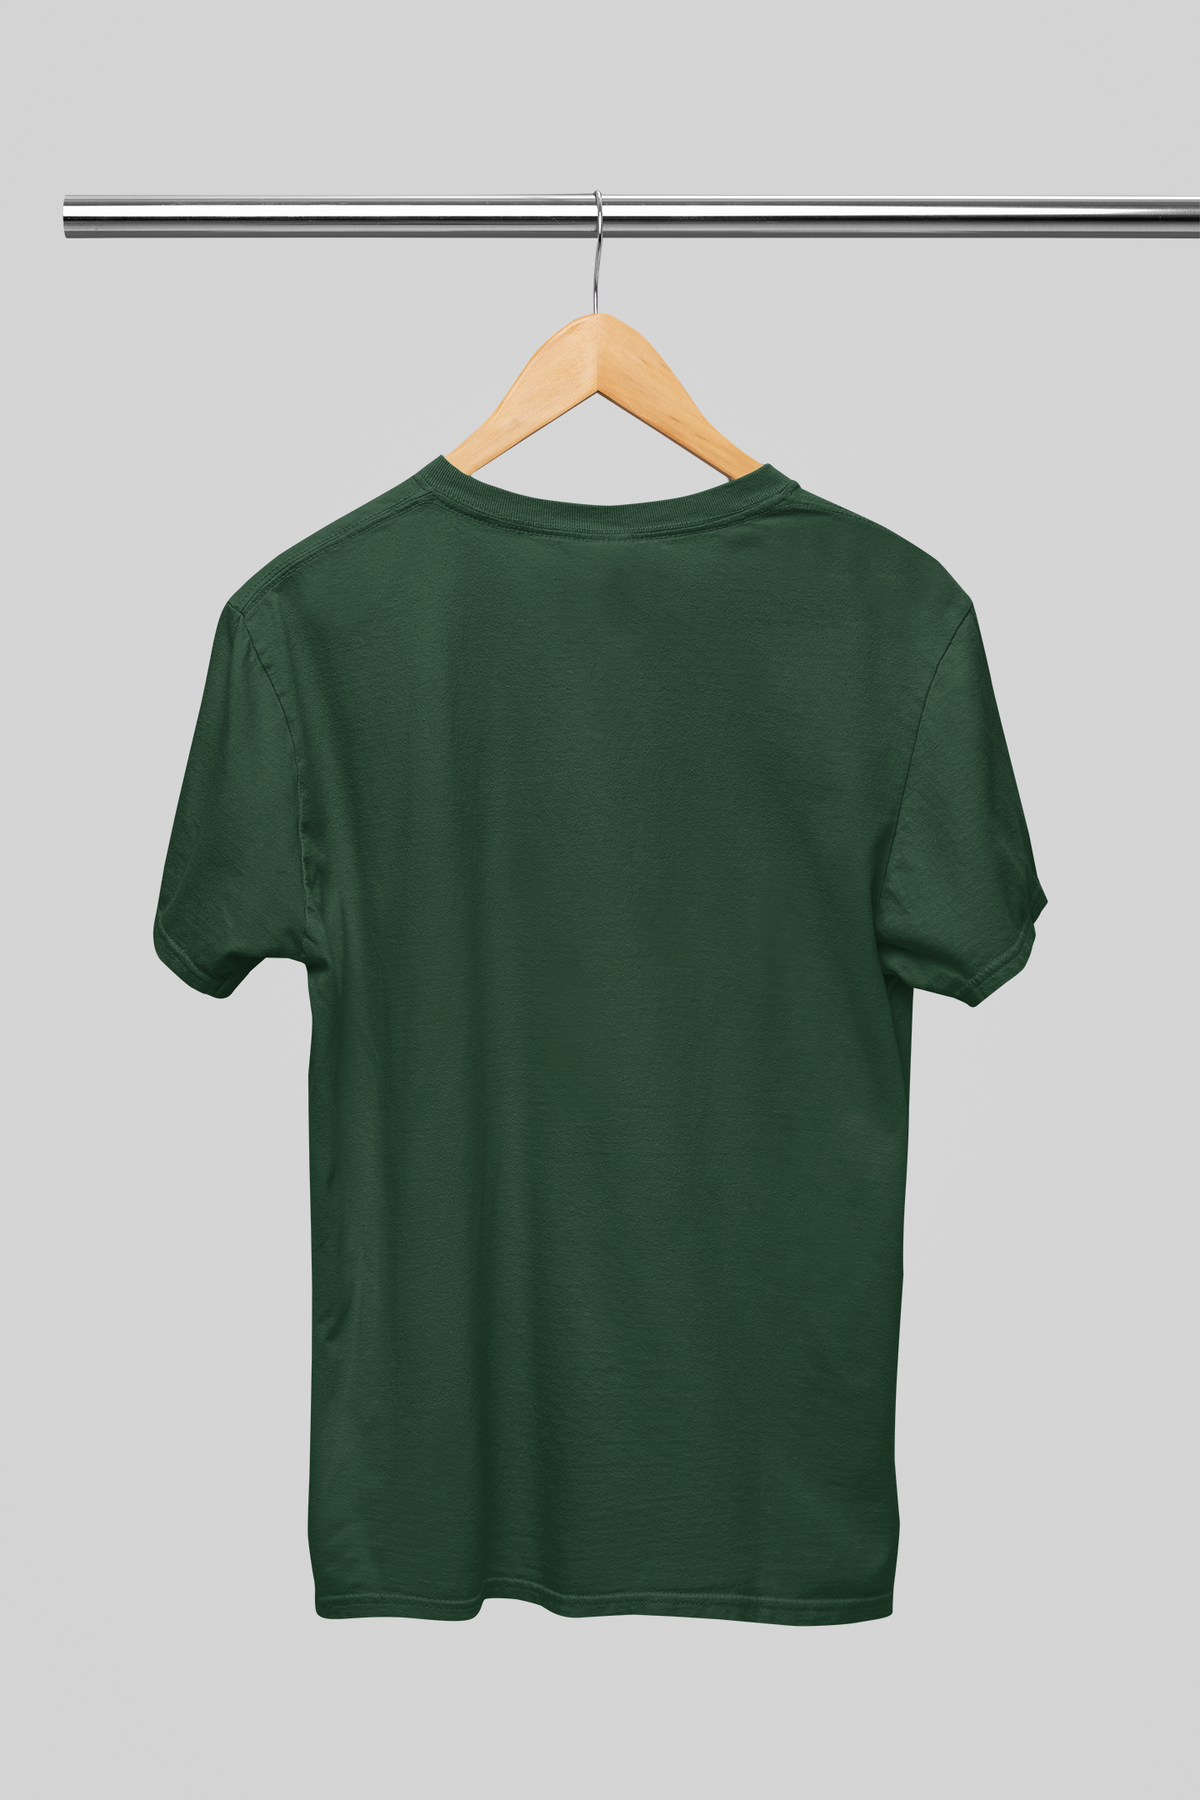 Plain Olive Green Unisex T-shirt